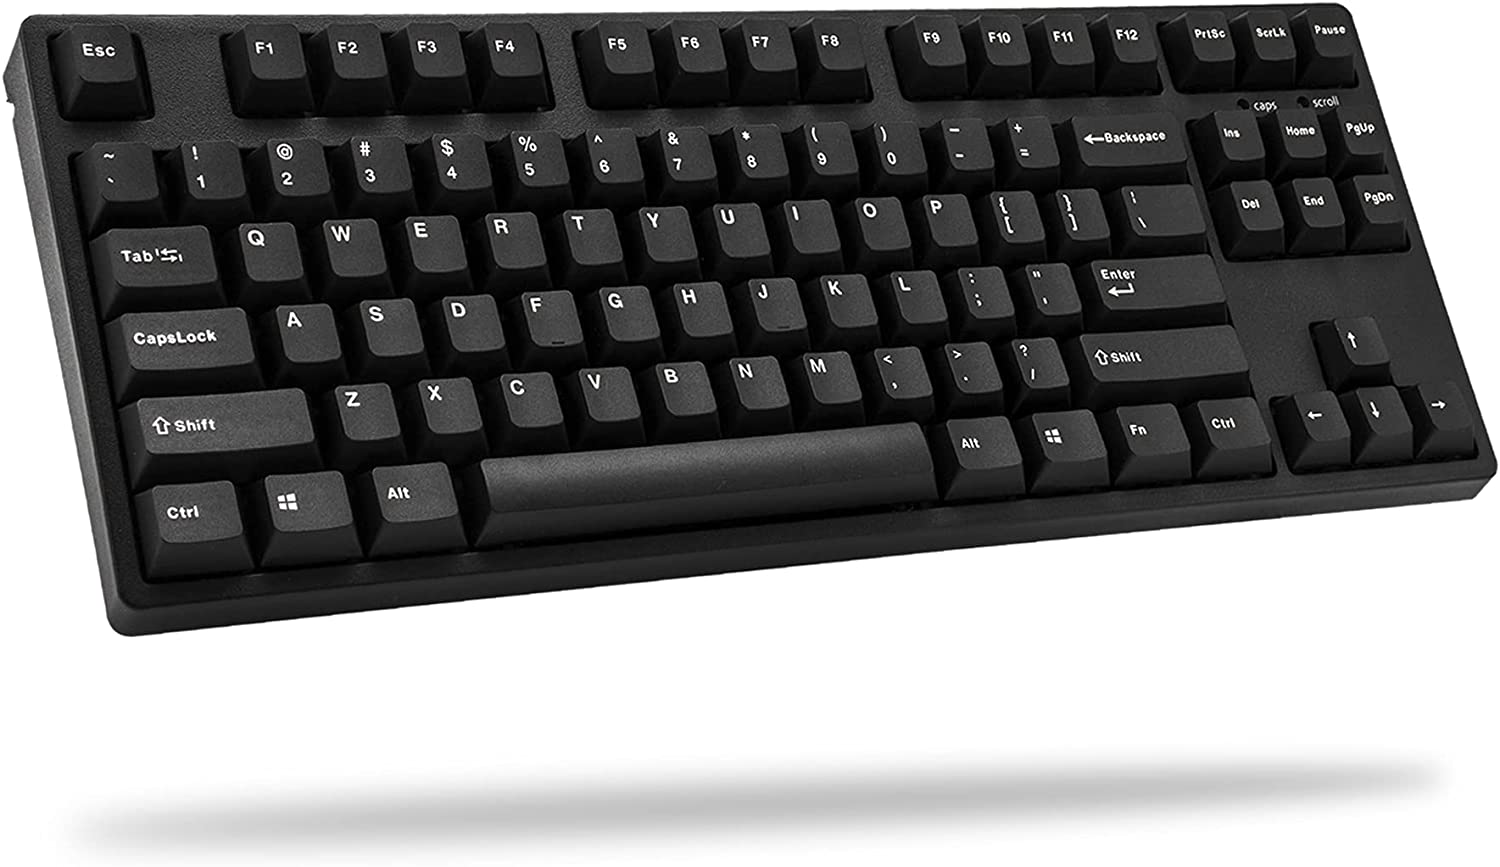 iKBC CD87 V2 Ergonomic Mechanical Keyboard